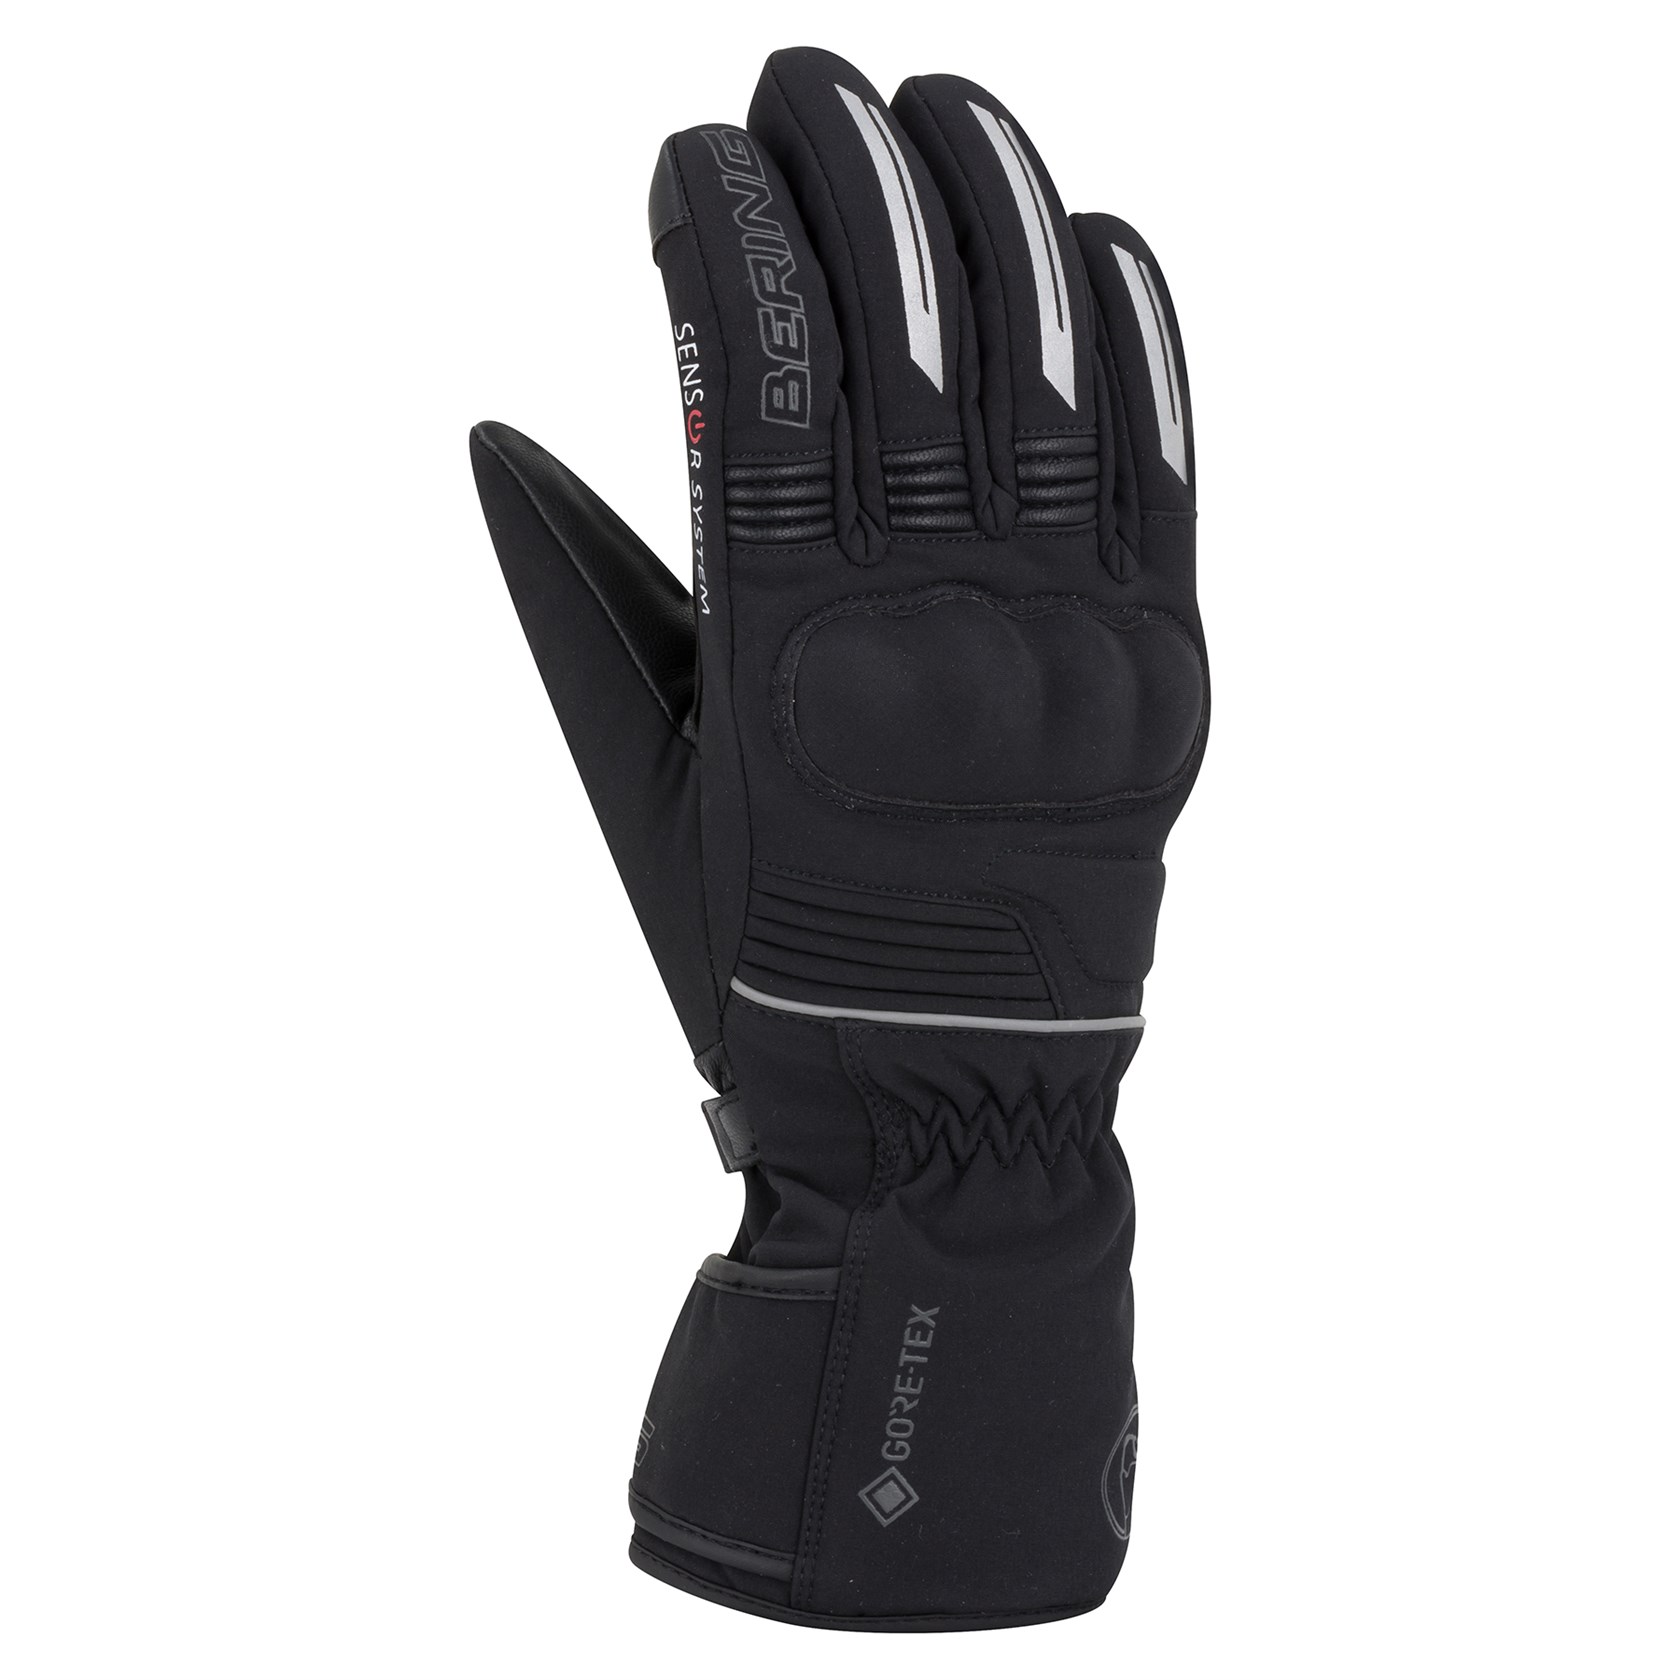 Rukka Offwind Infinium Gore-Tex Textile Motorcycle Gloves Black 